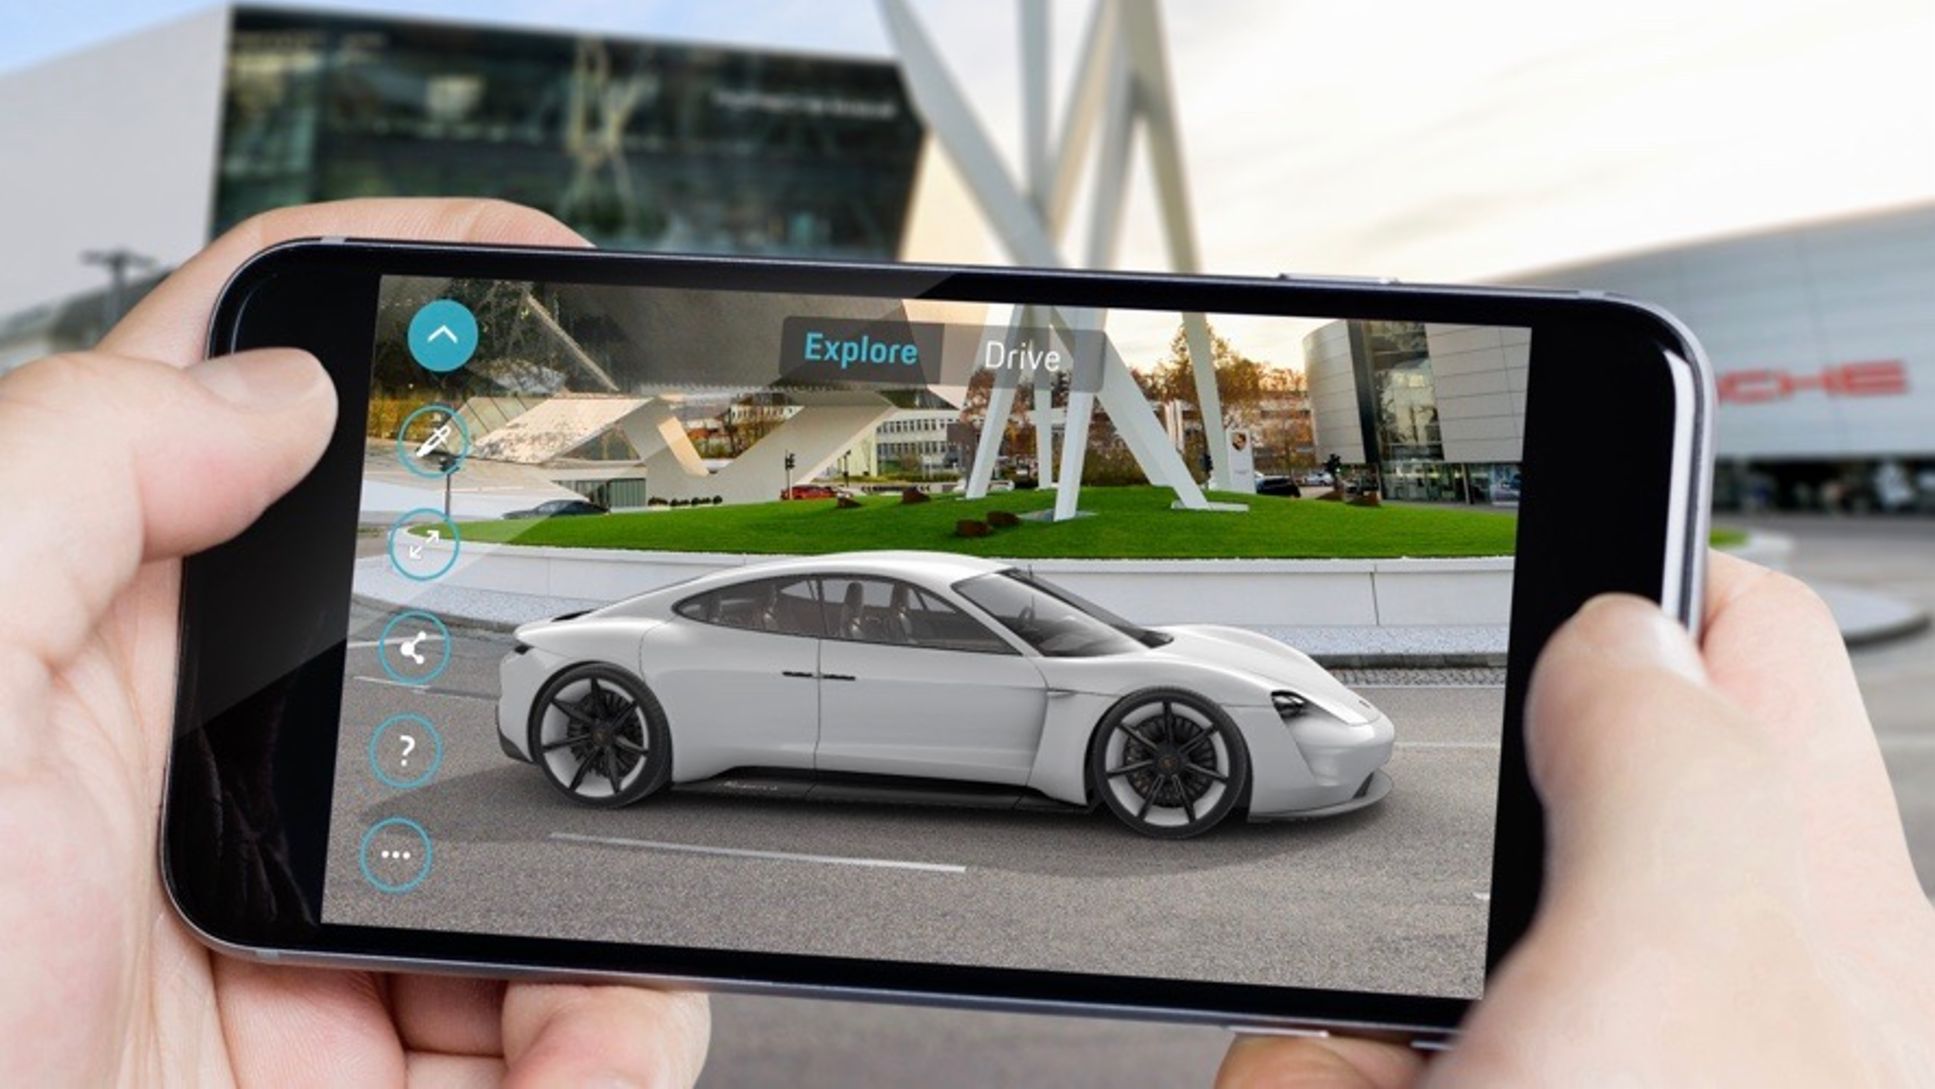 Mission E Augmented Reality app, 2018, Porsche AG